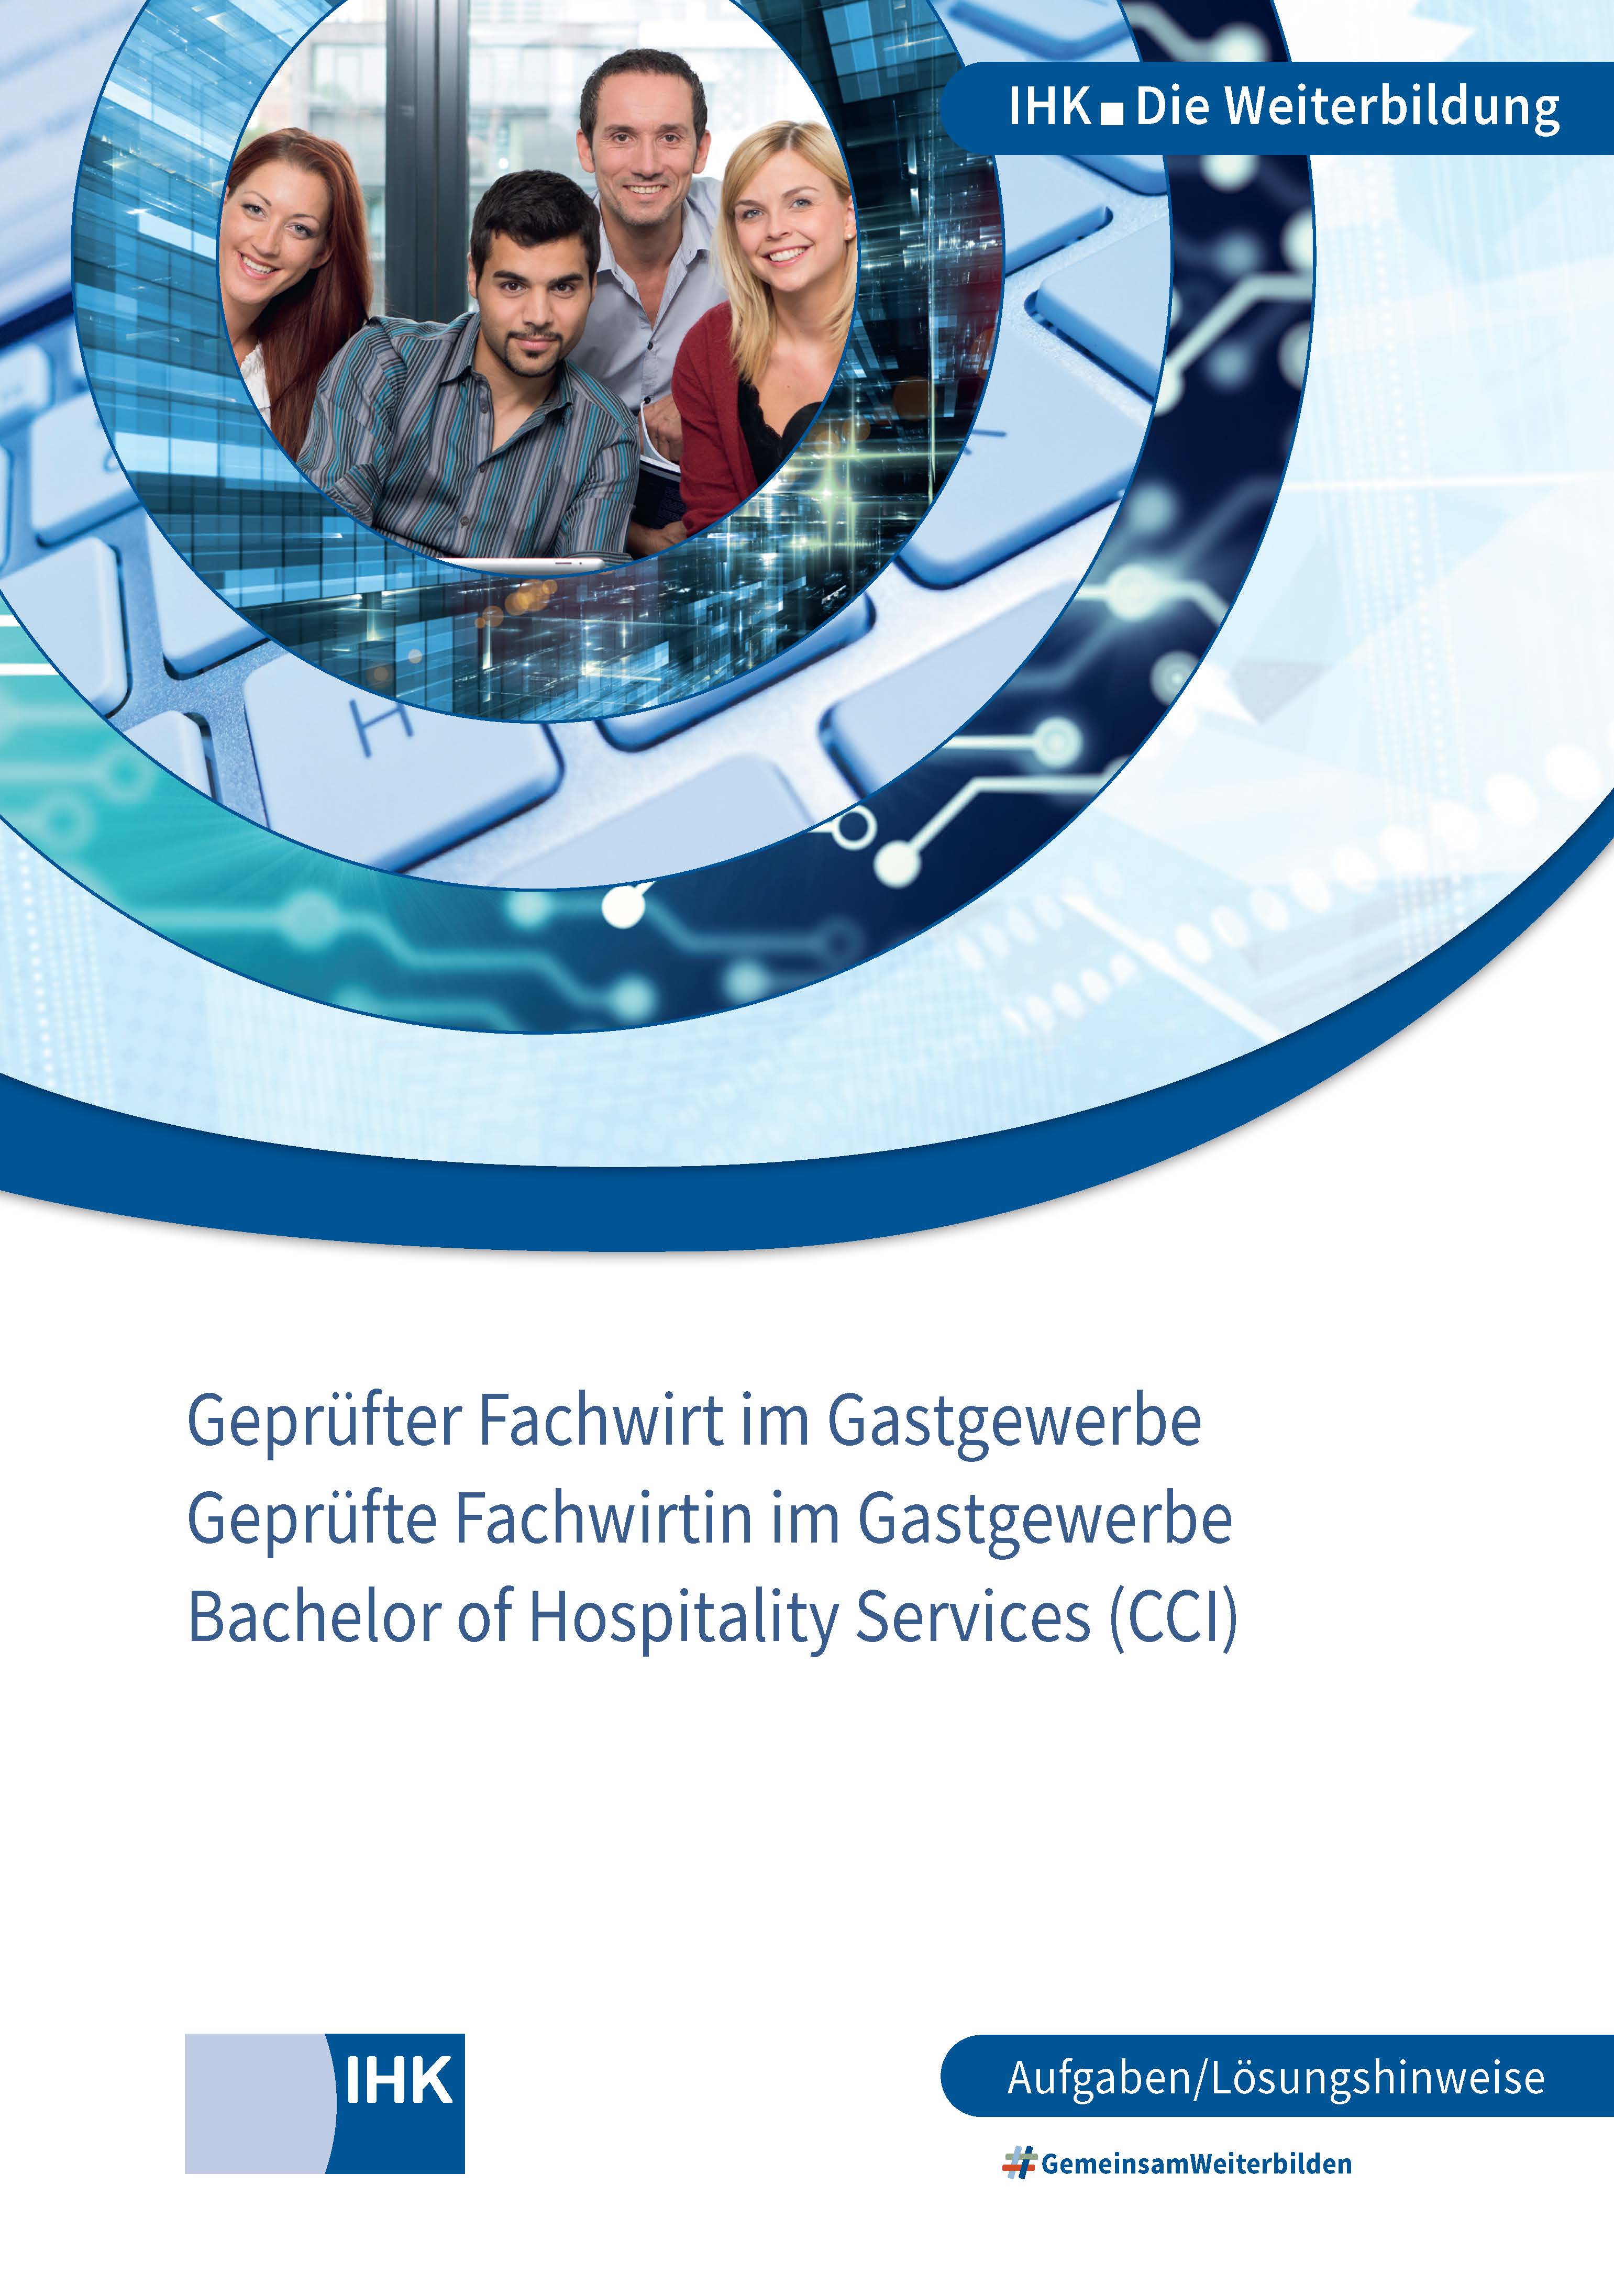 Geprüfte Fachwirte im Gastgewerbe – Bachelor of Hospitality Services (CCI)